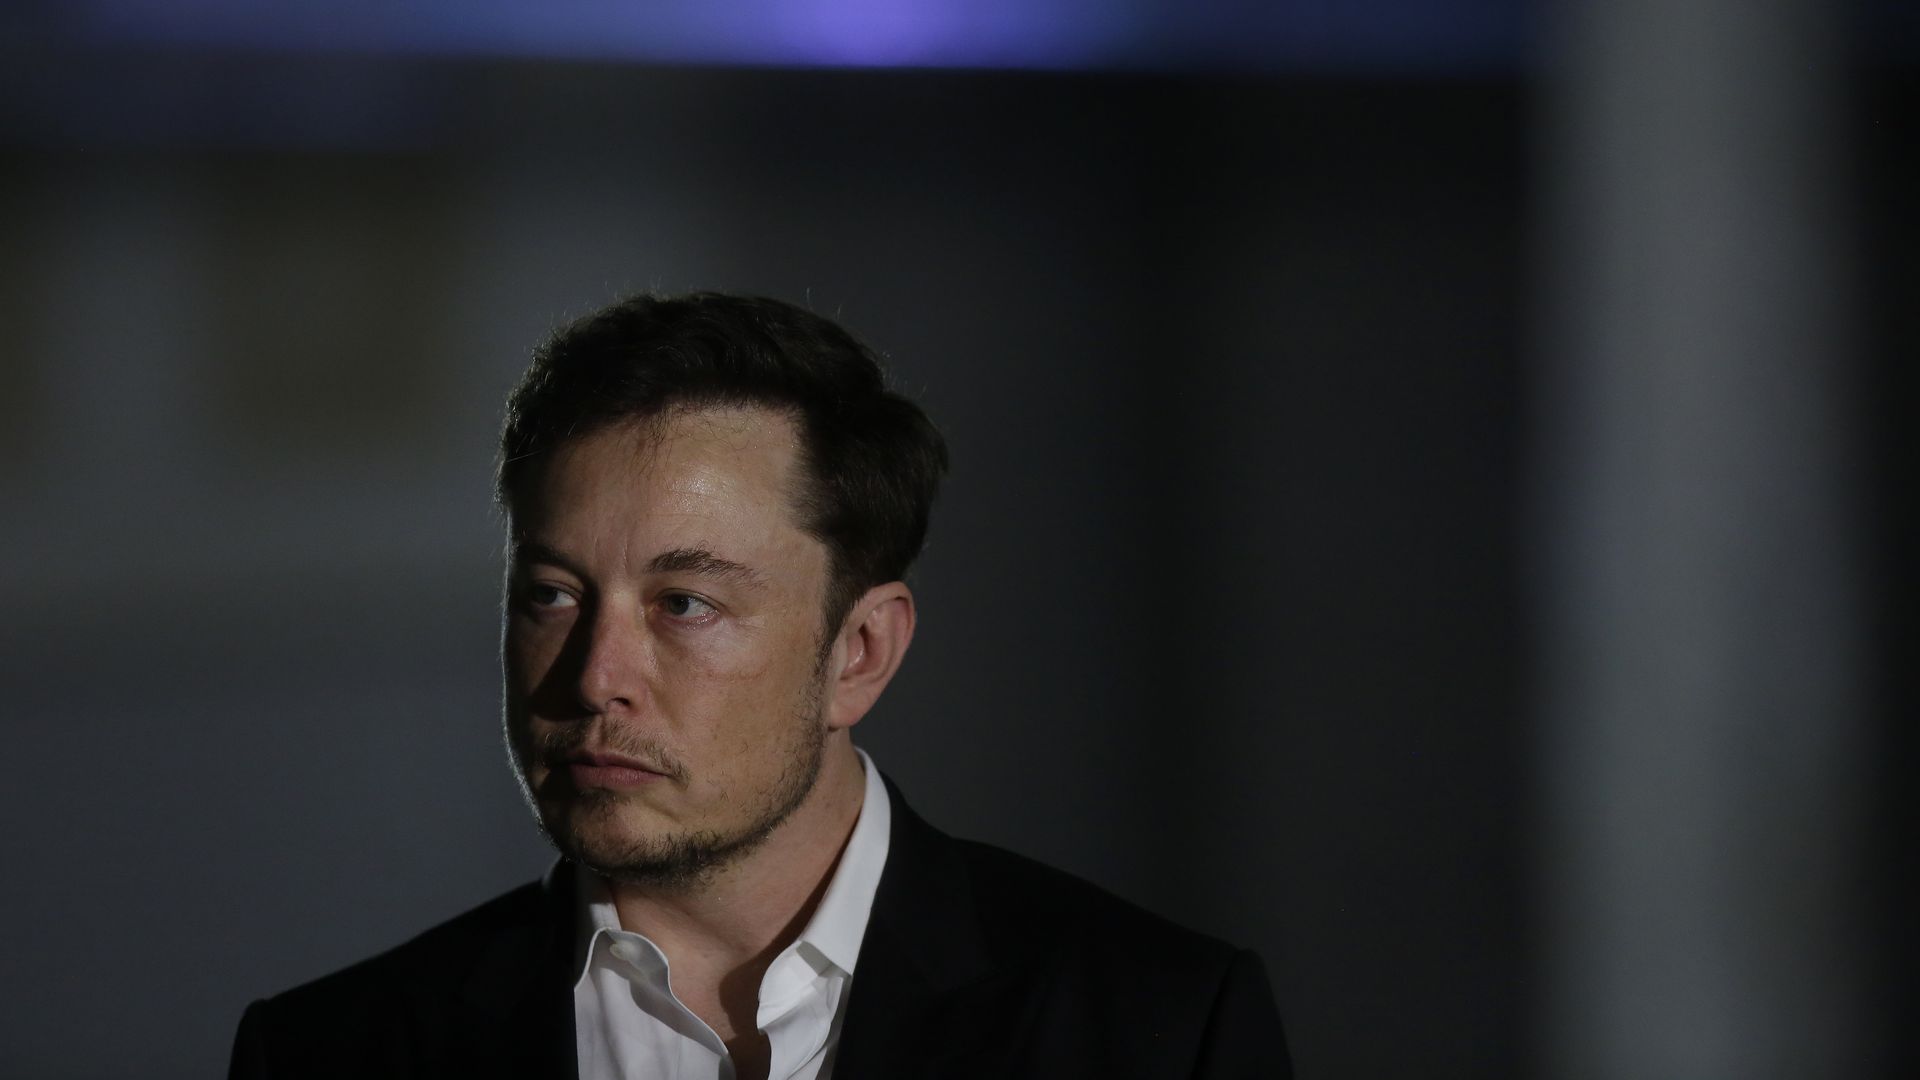 Engineer and tech entrepreneur Elon Musk 